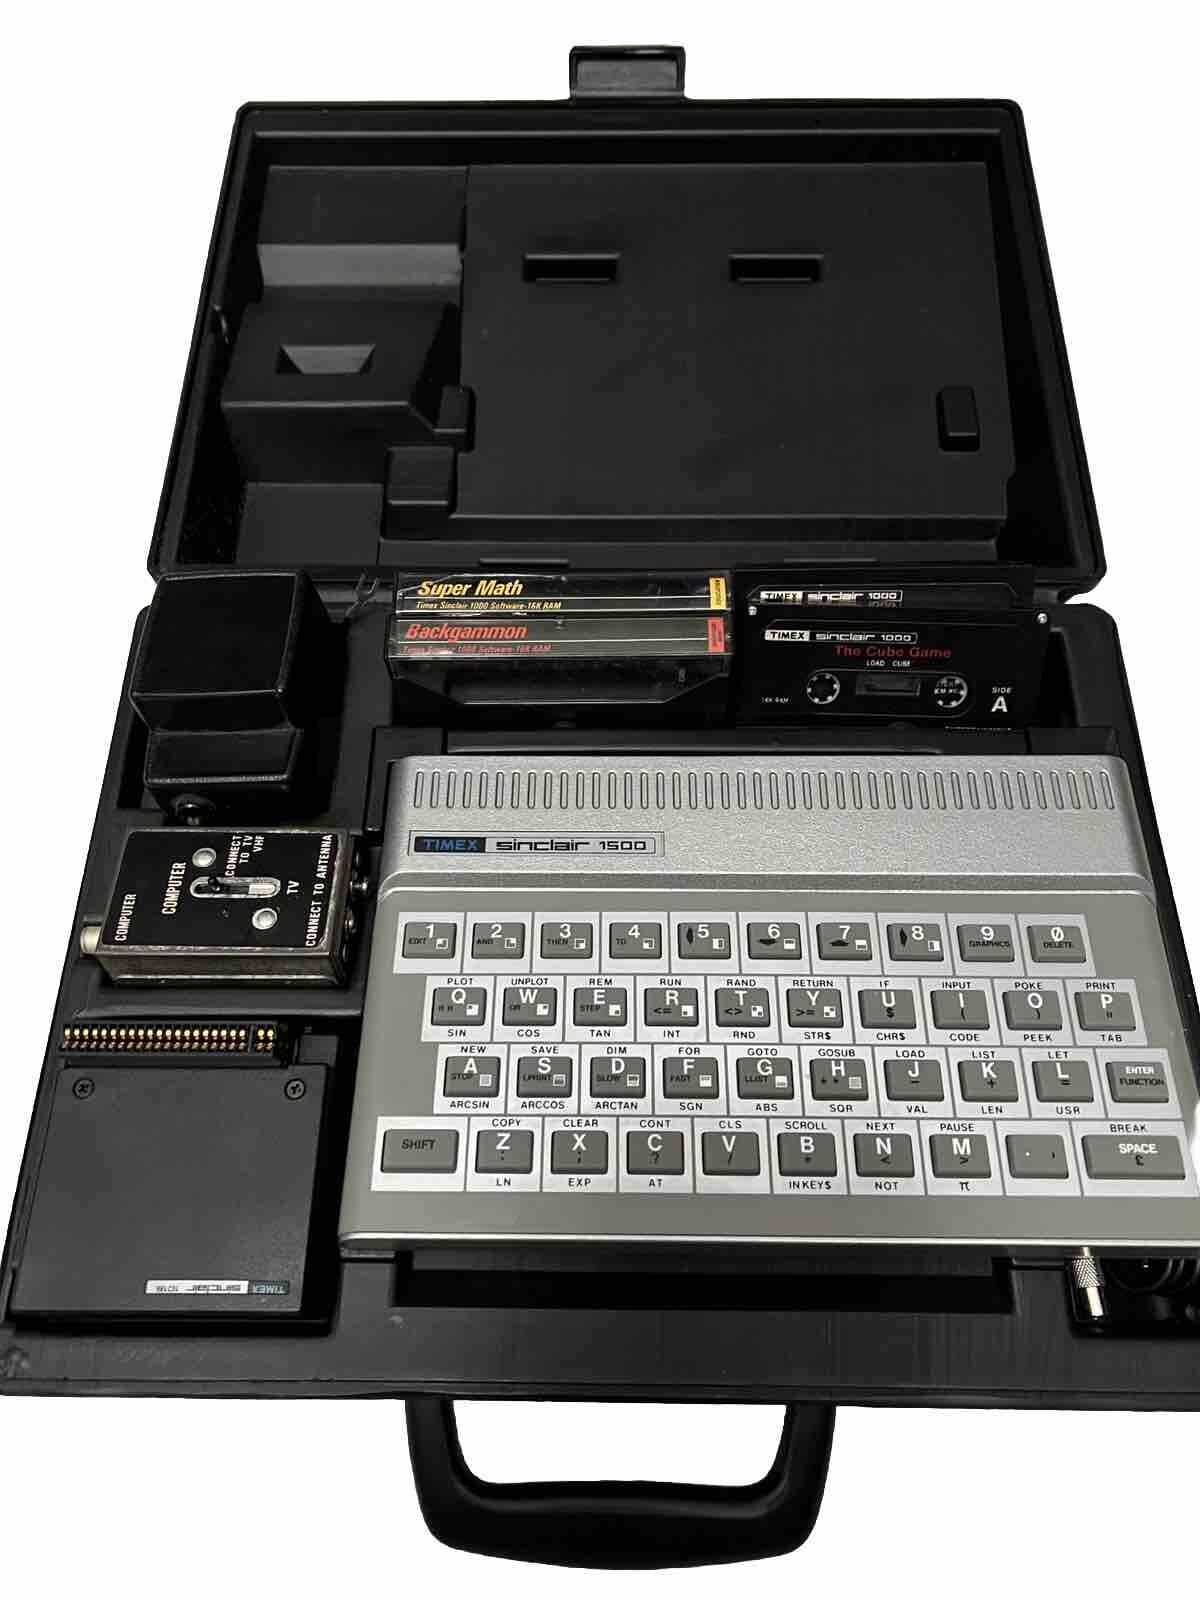 Timex Sinclair 1500 Computer w/ RARE Case, 16K RAM, Cords, Manual WORKING